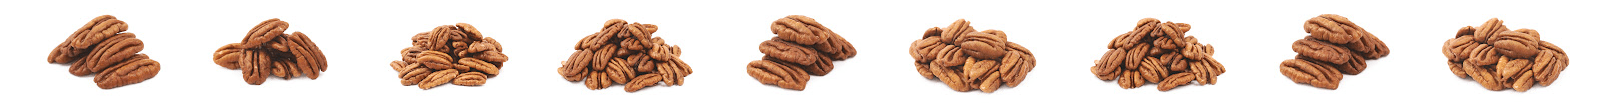 California nuts